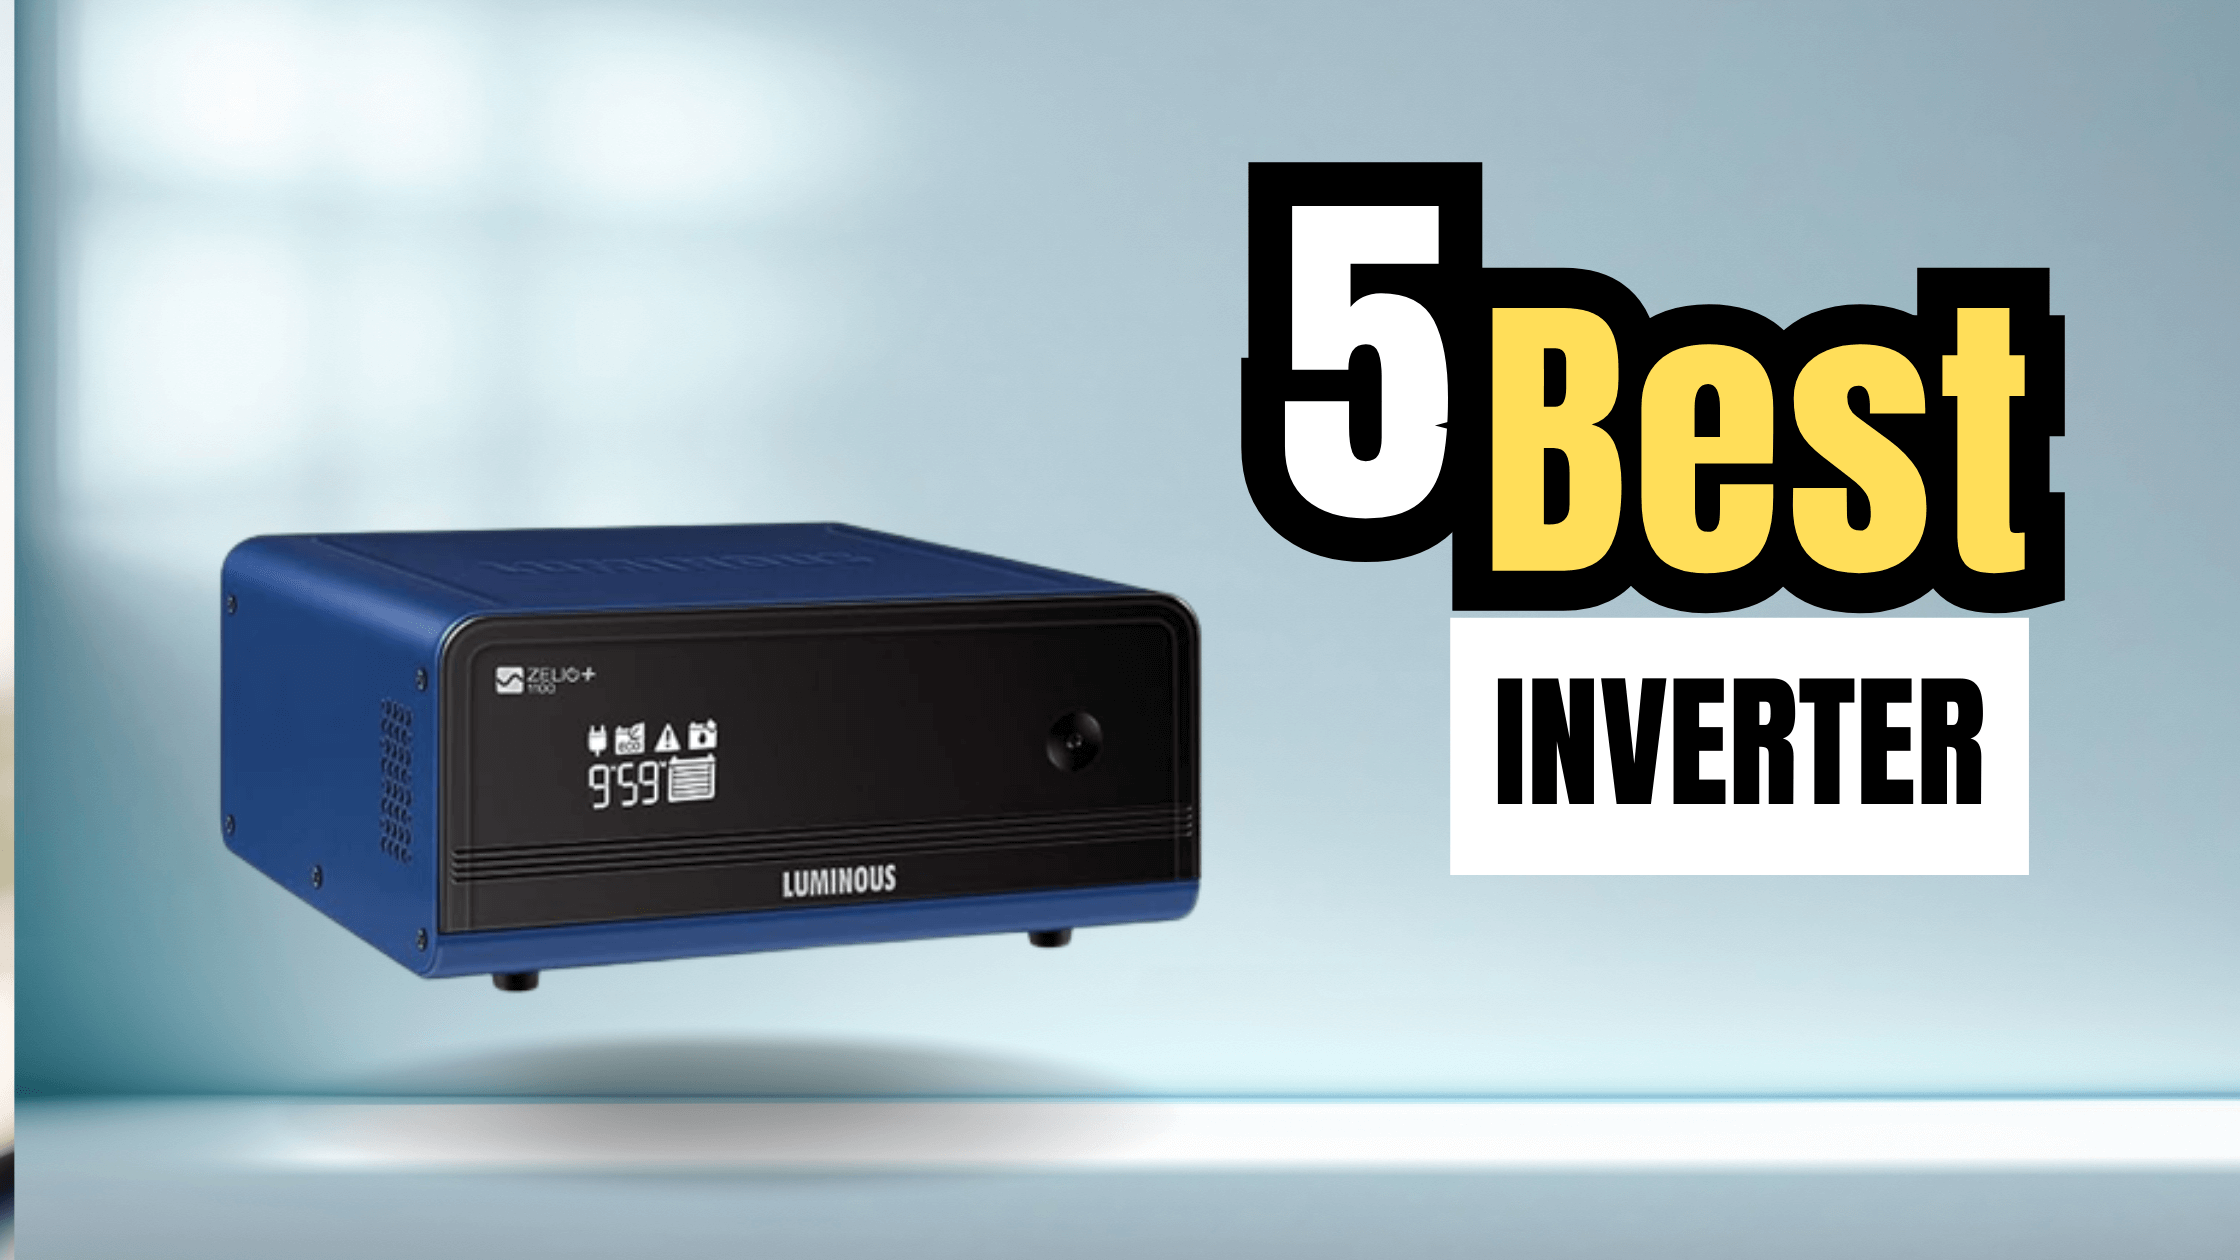 5 Best Inverter